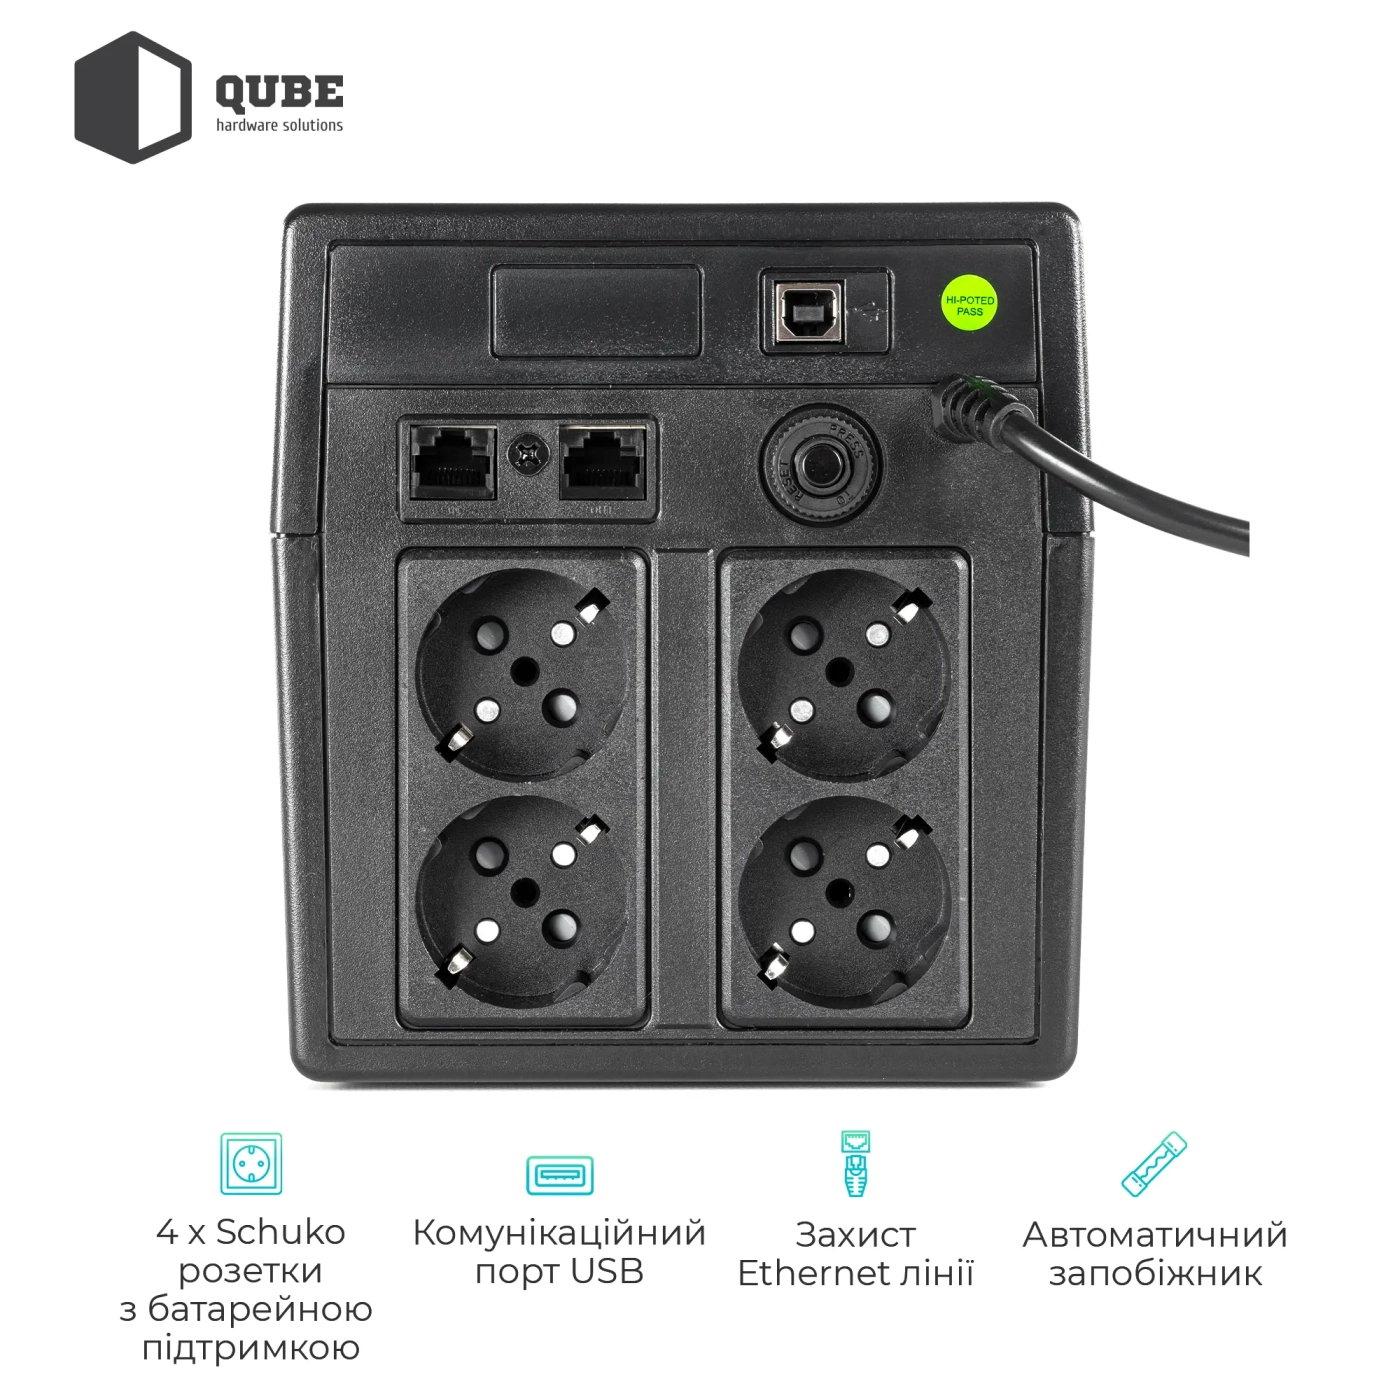 Купить ИБП (UPS) линейно-интерактивный Qube DG 1050, 1050VA/600W, LCD, 4 x Schuko, RJ-45, USB - фото 4